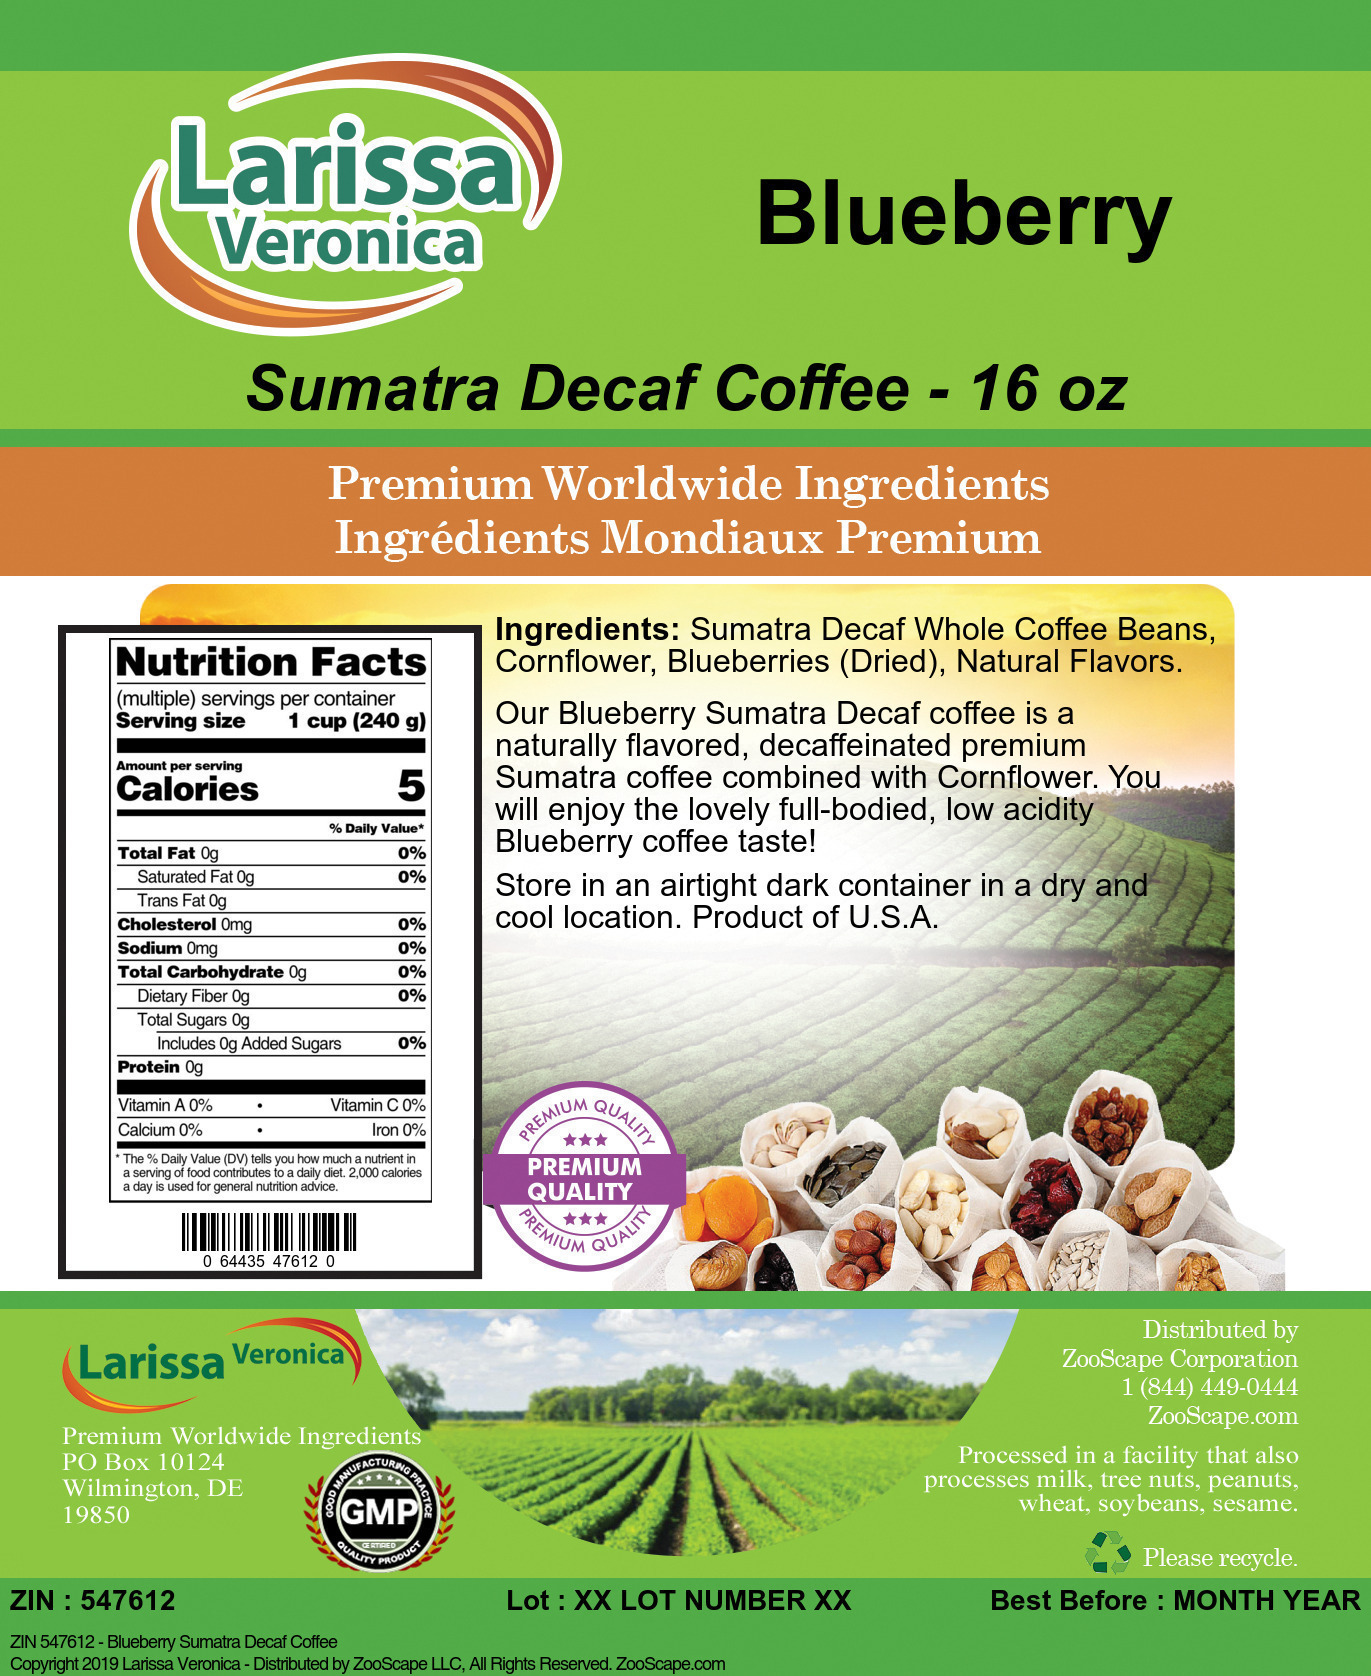 Blueberry Sumatra Decaf Coffee - Label